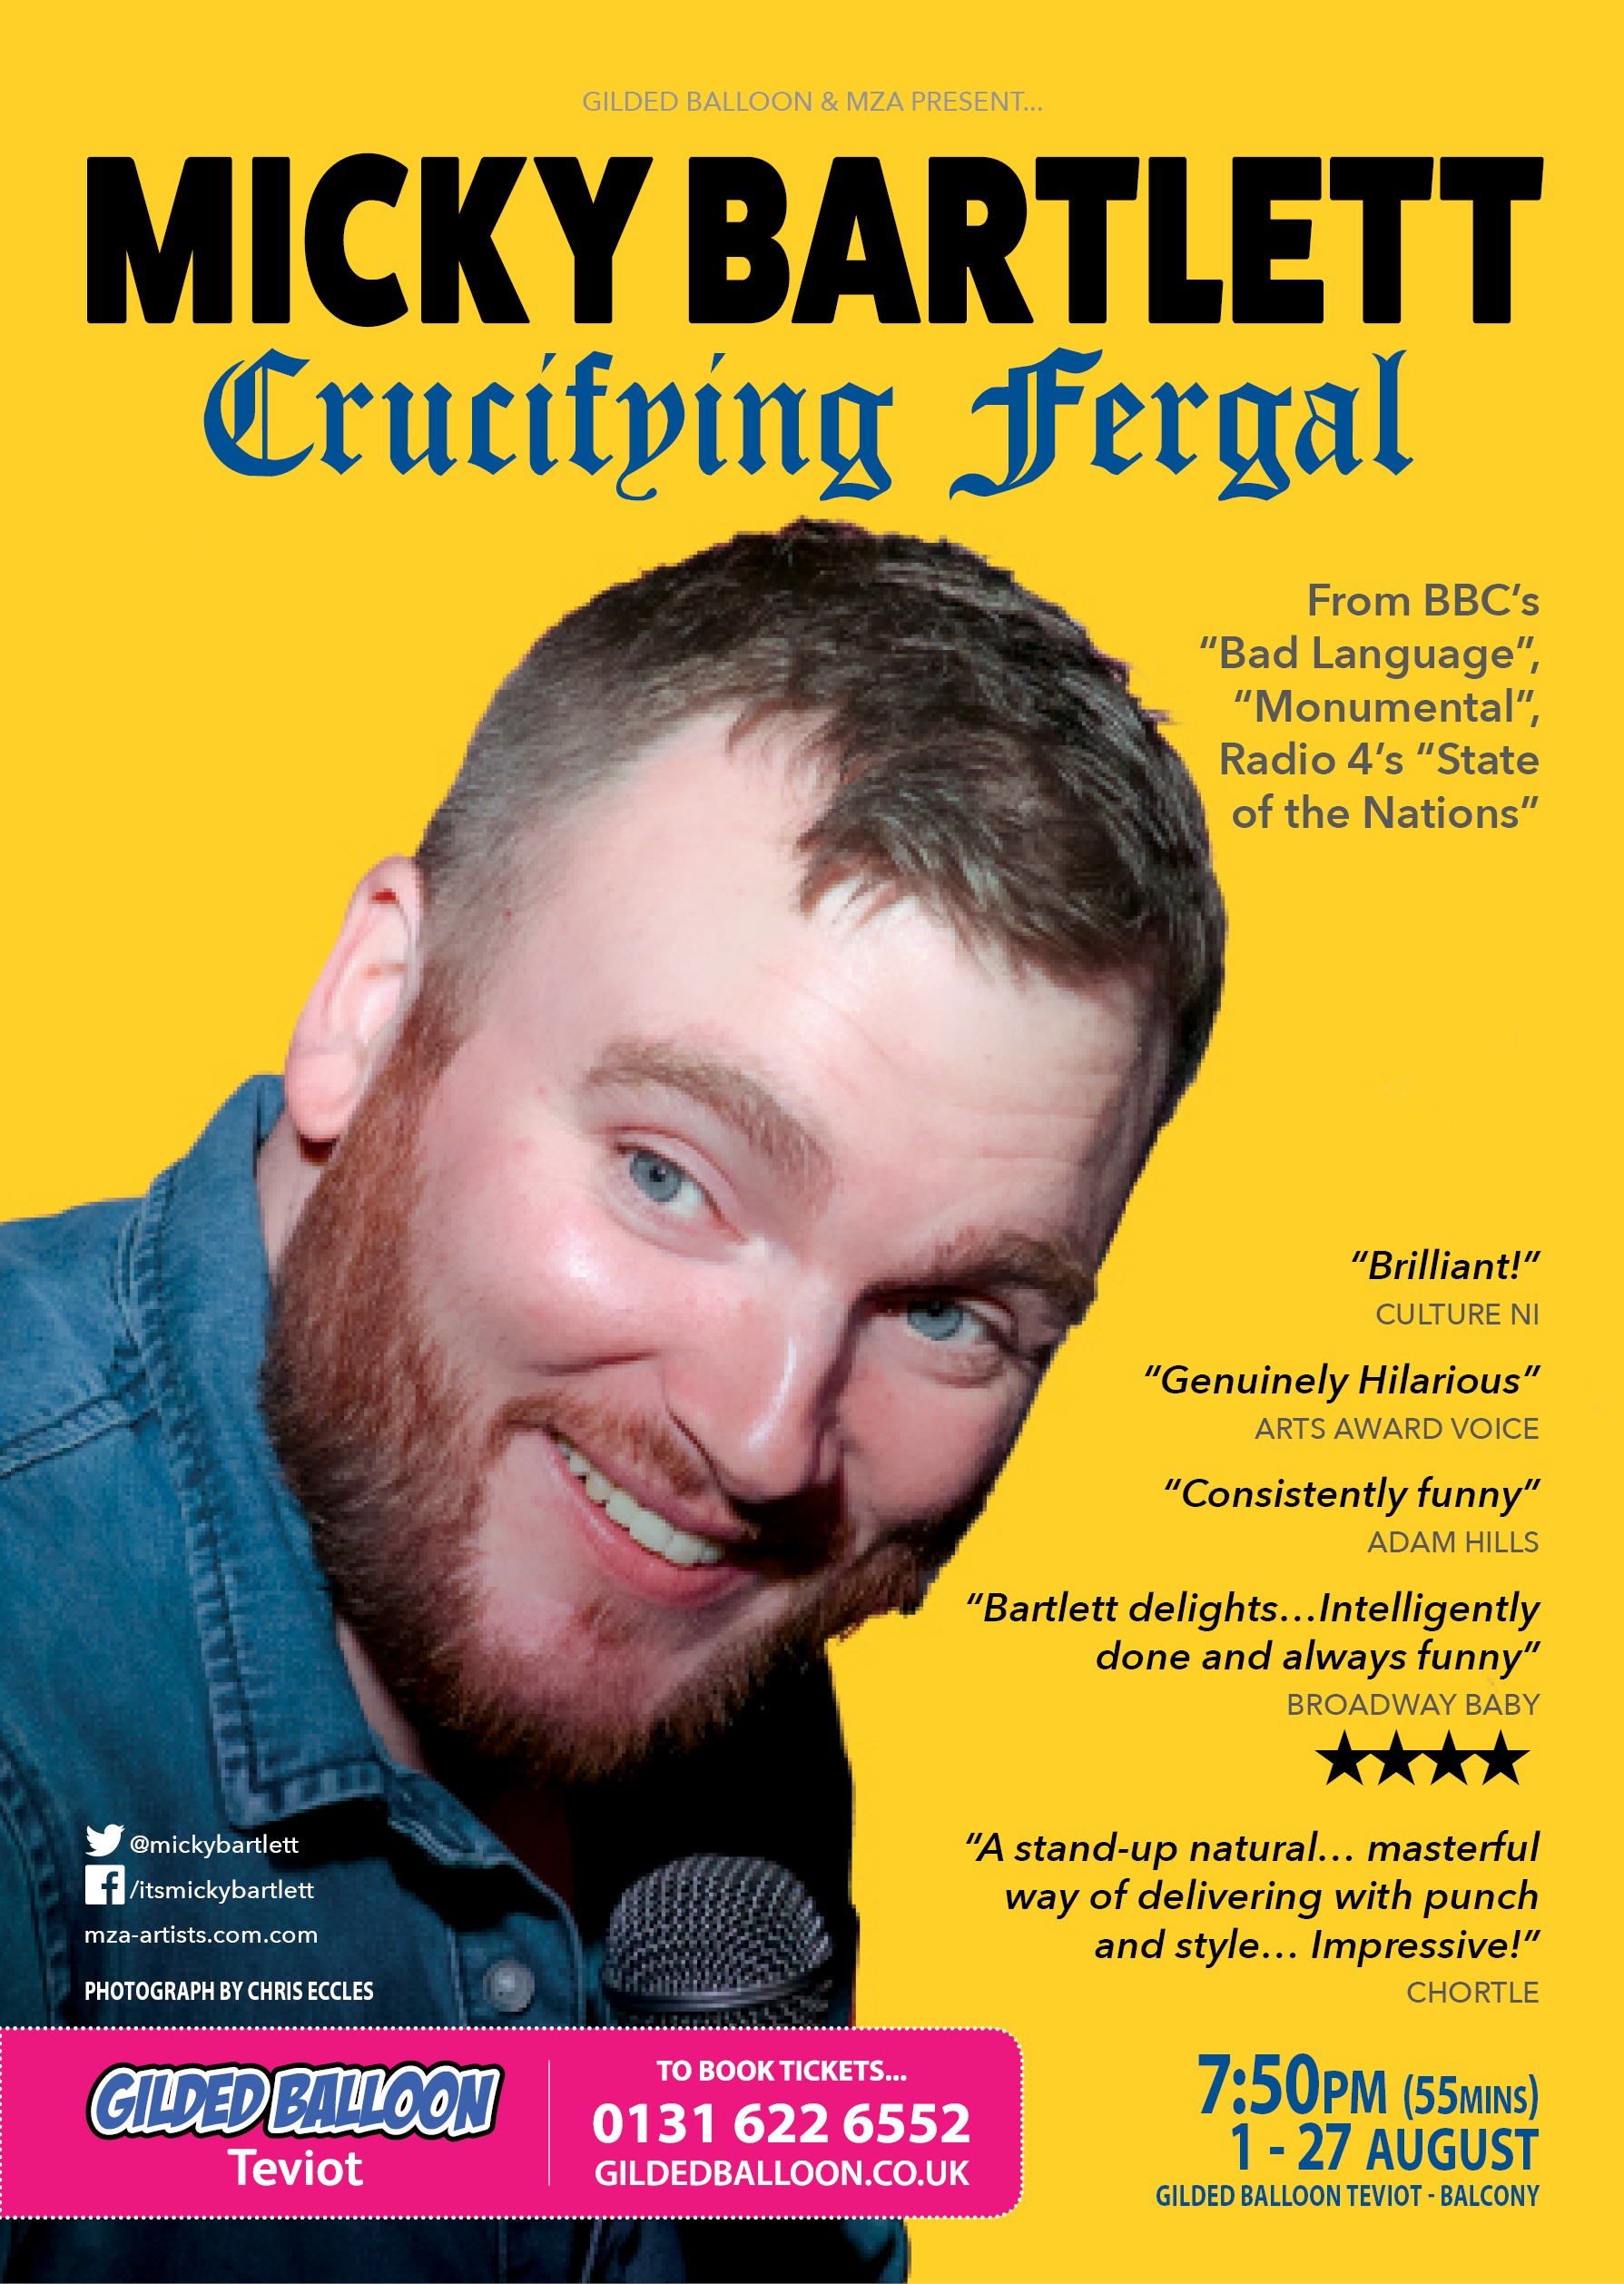 The poster for Micky Bartlett: Crucifying Fergal